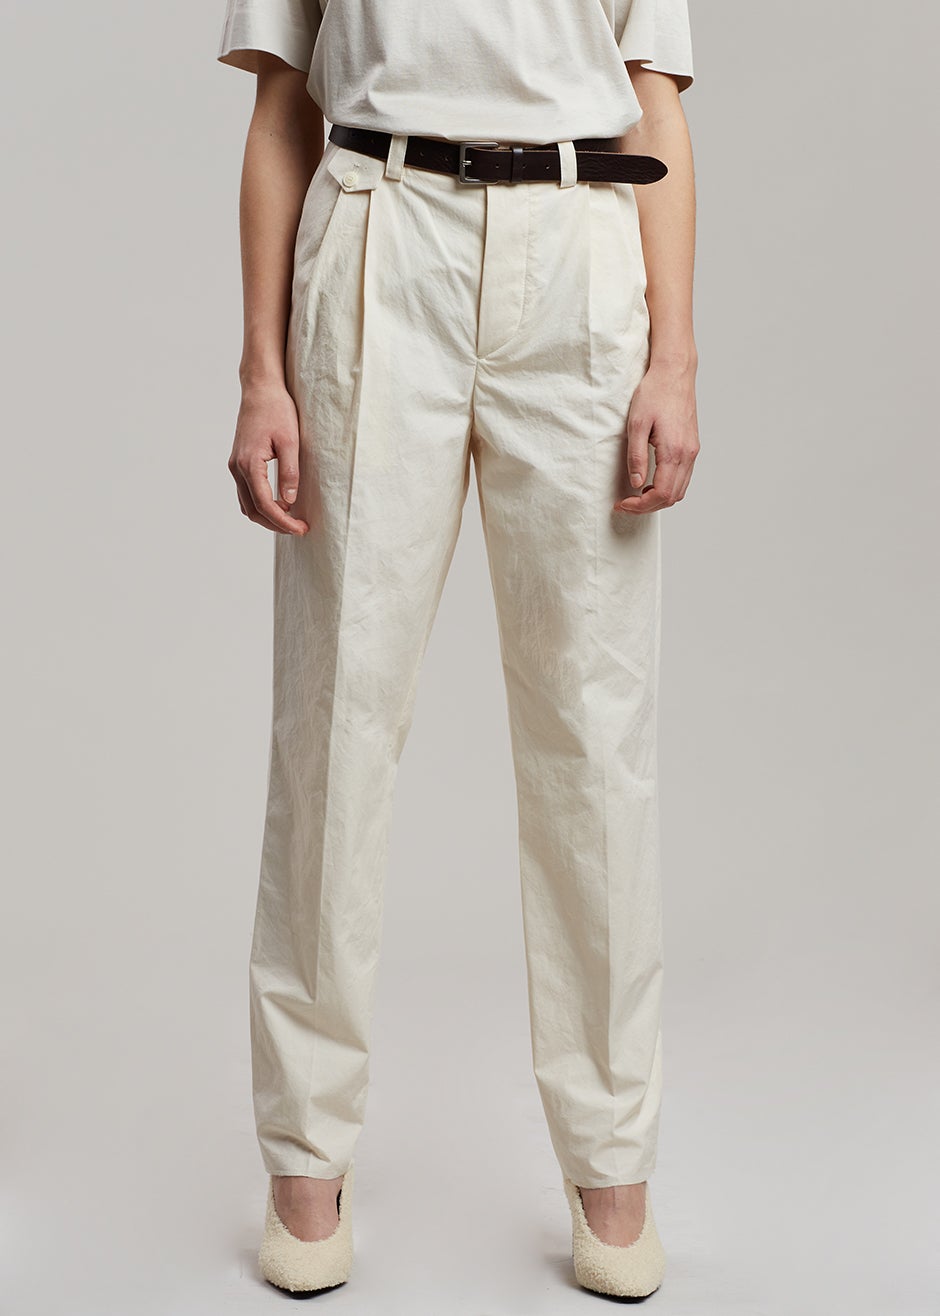 ColorPlus Grey Cotton Regular Fit Trousers